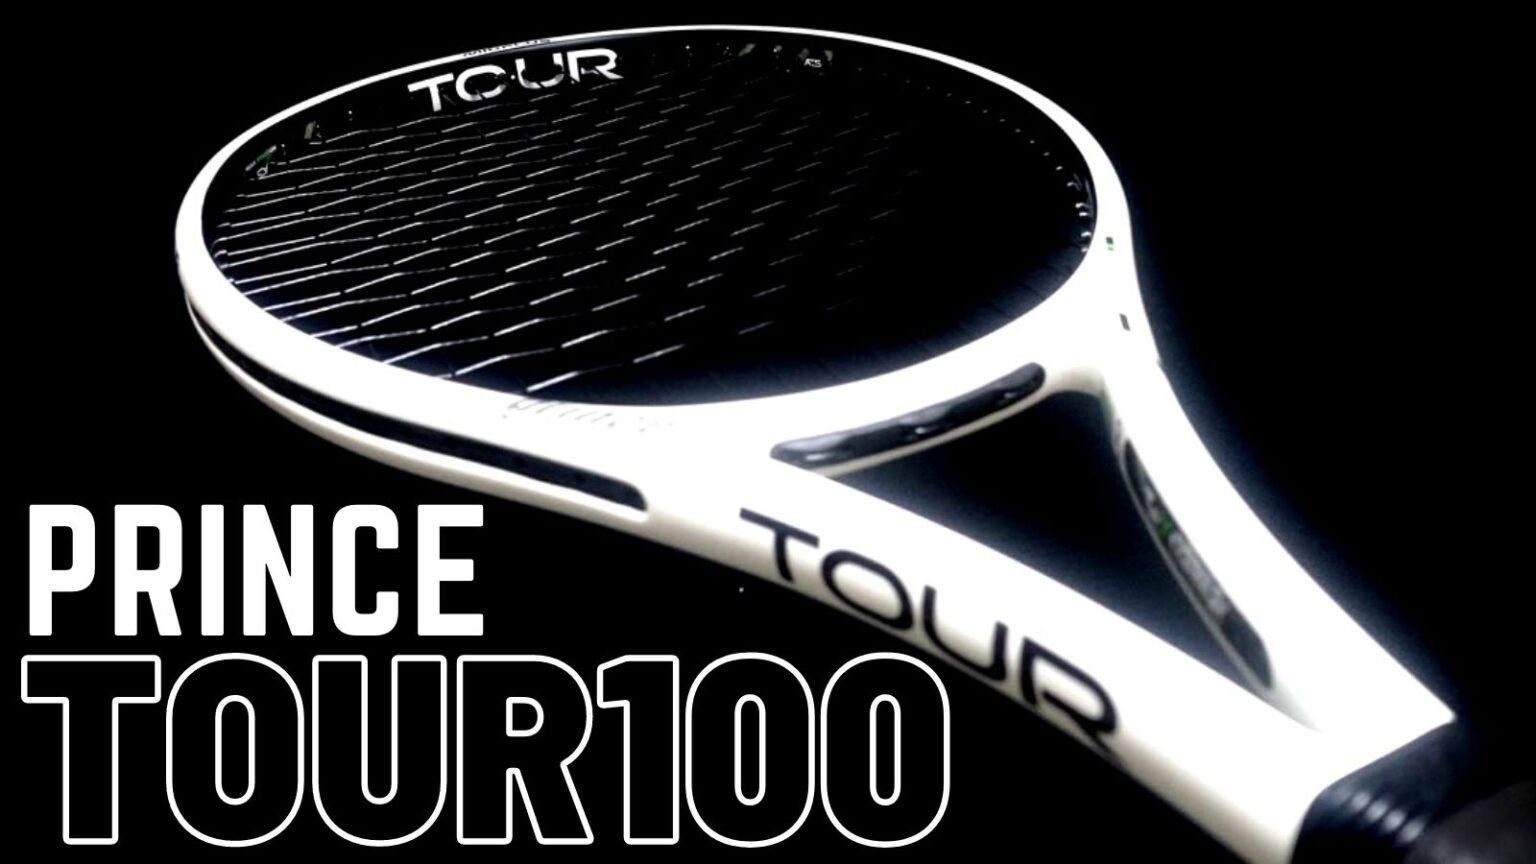 prince tour 100 310g G2 プリンス ツアー100 - ラケット(硬式用)